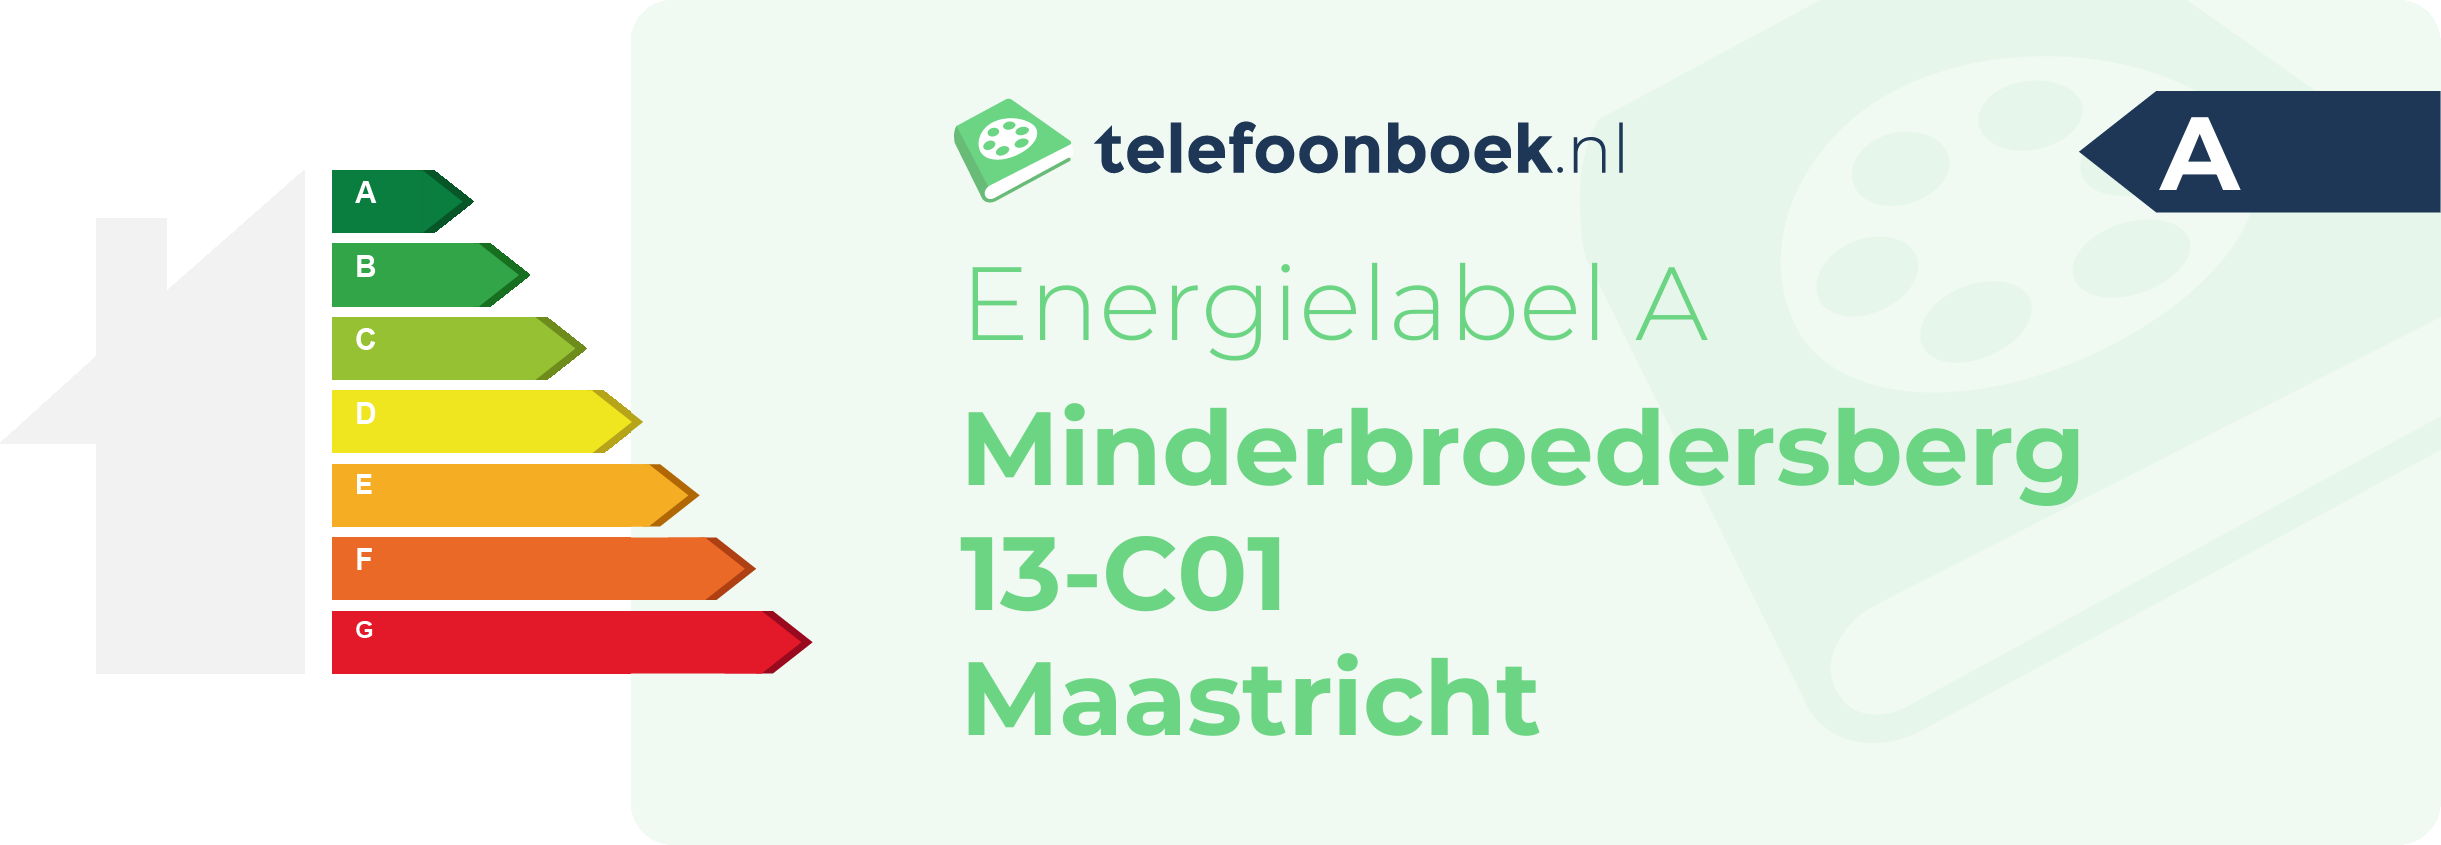 Energielabel Minderbroedersberg 13-C01 Maastricht